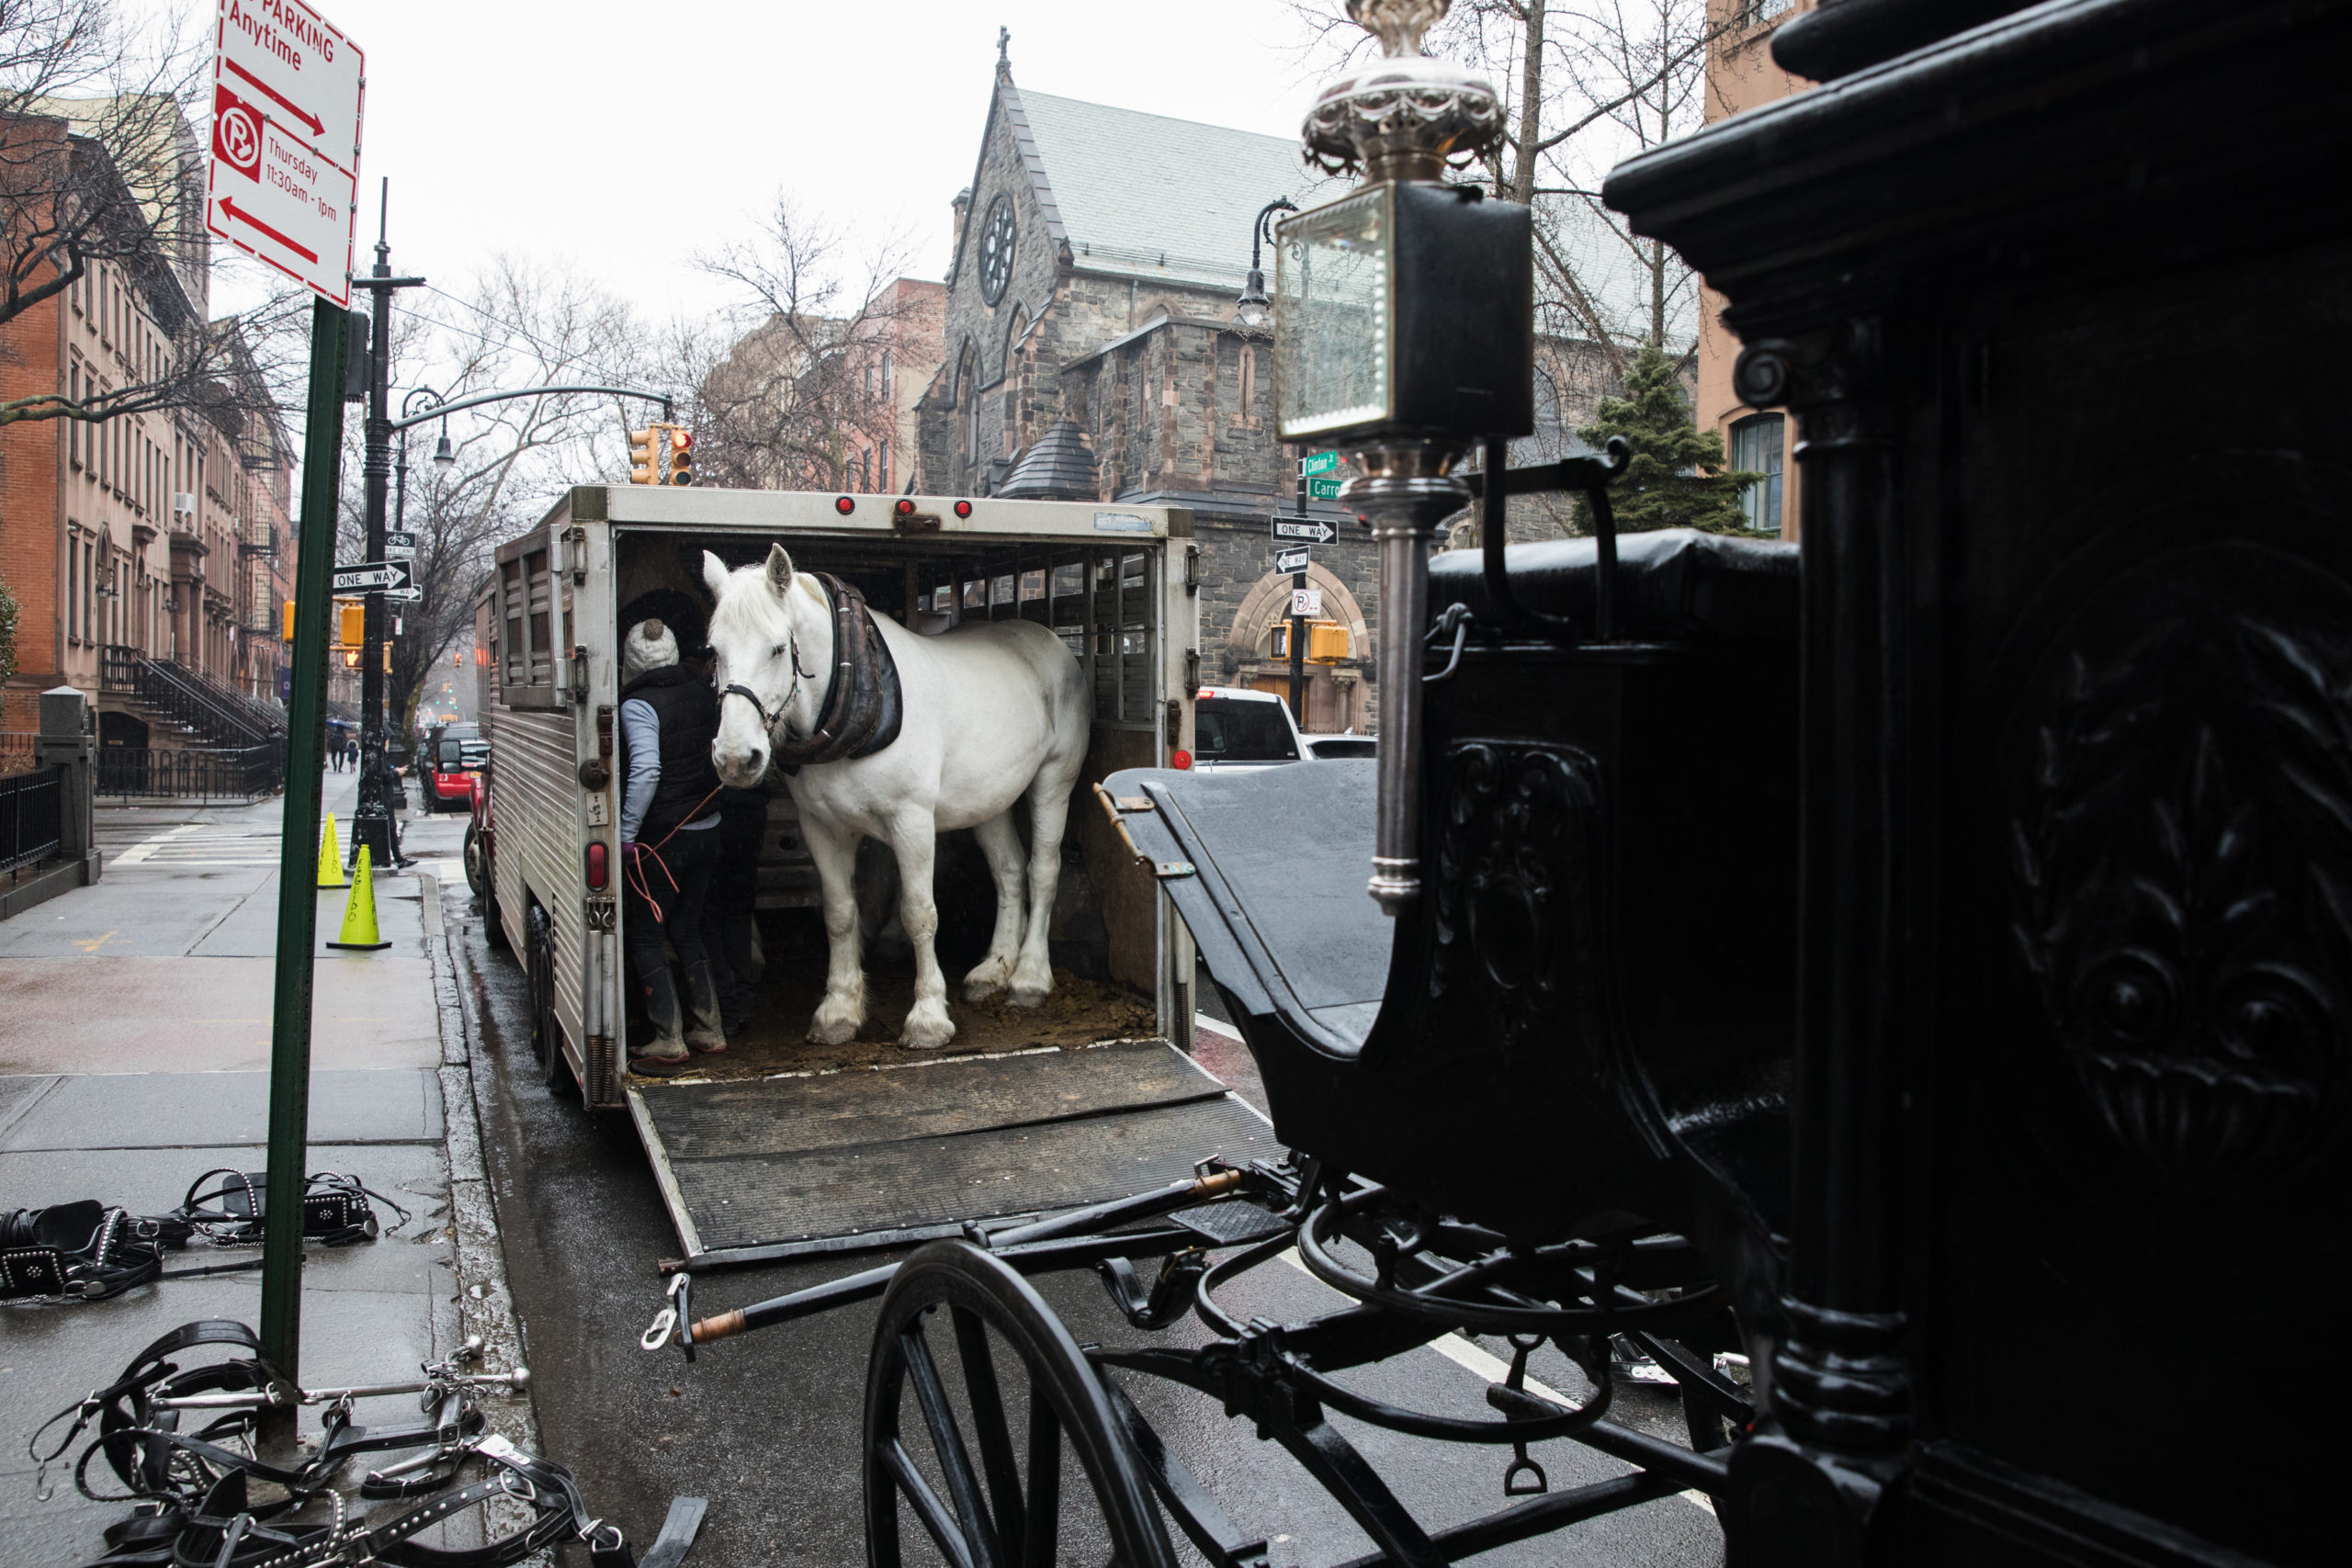 The Studebaker hearse was drawn by two white Percheron horses. Photo: Paul Frangipane/Brooklyn Eagle